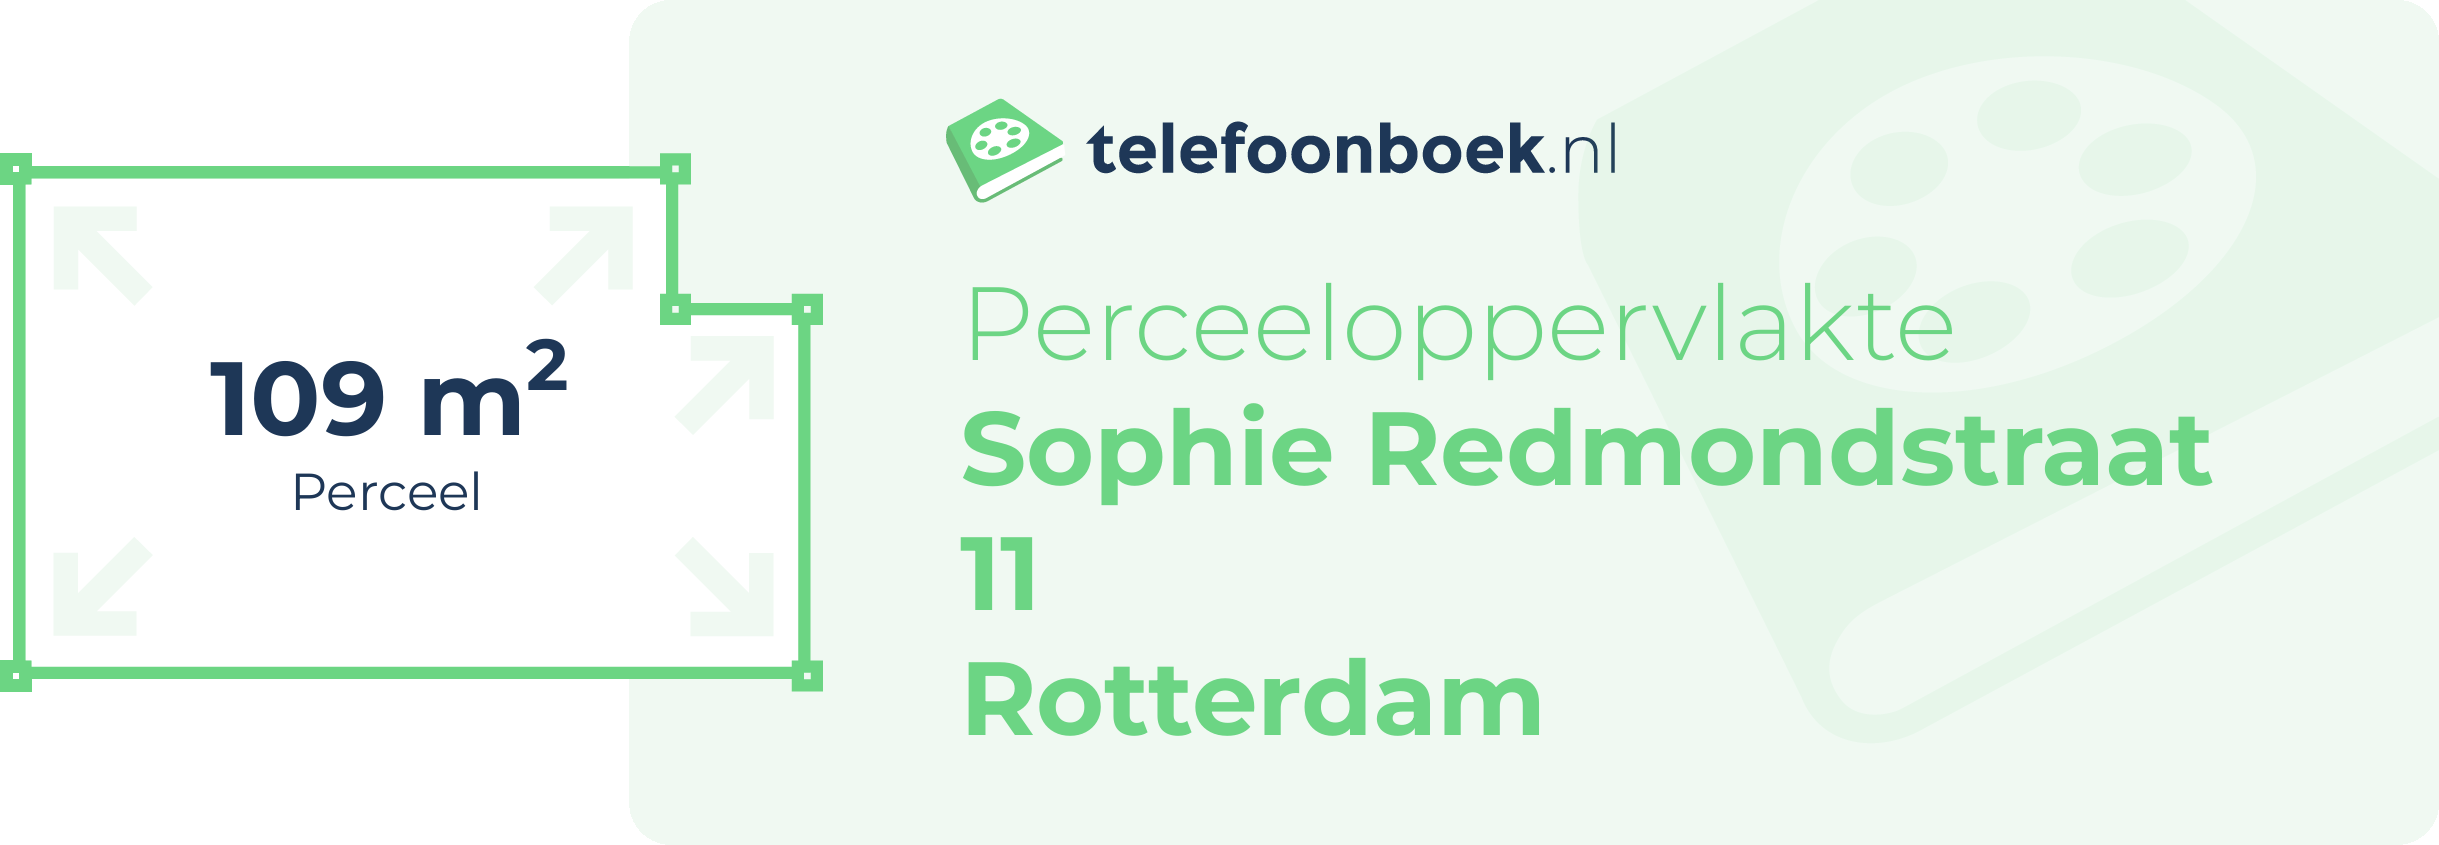 Perceeloppervlakte Sophie Redmondstraat 11 Rotterdam